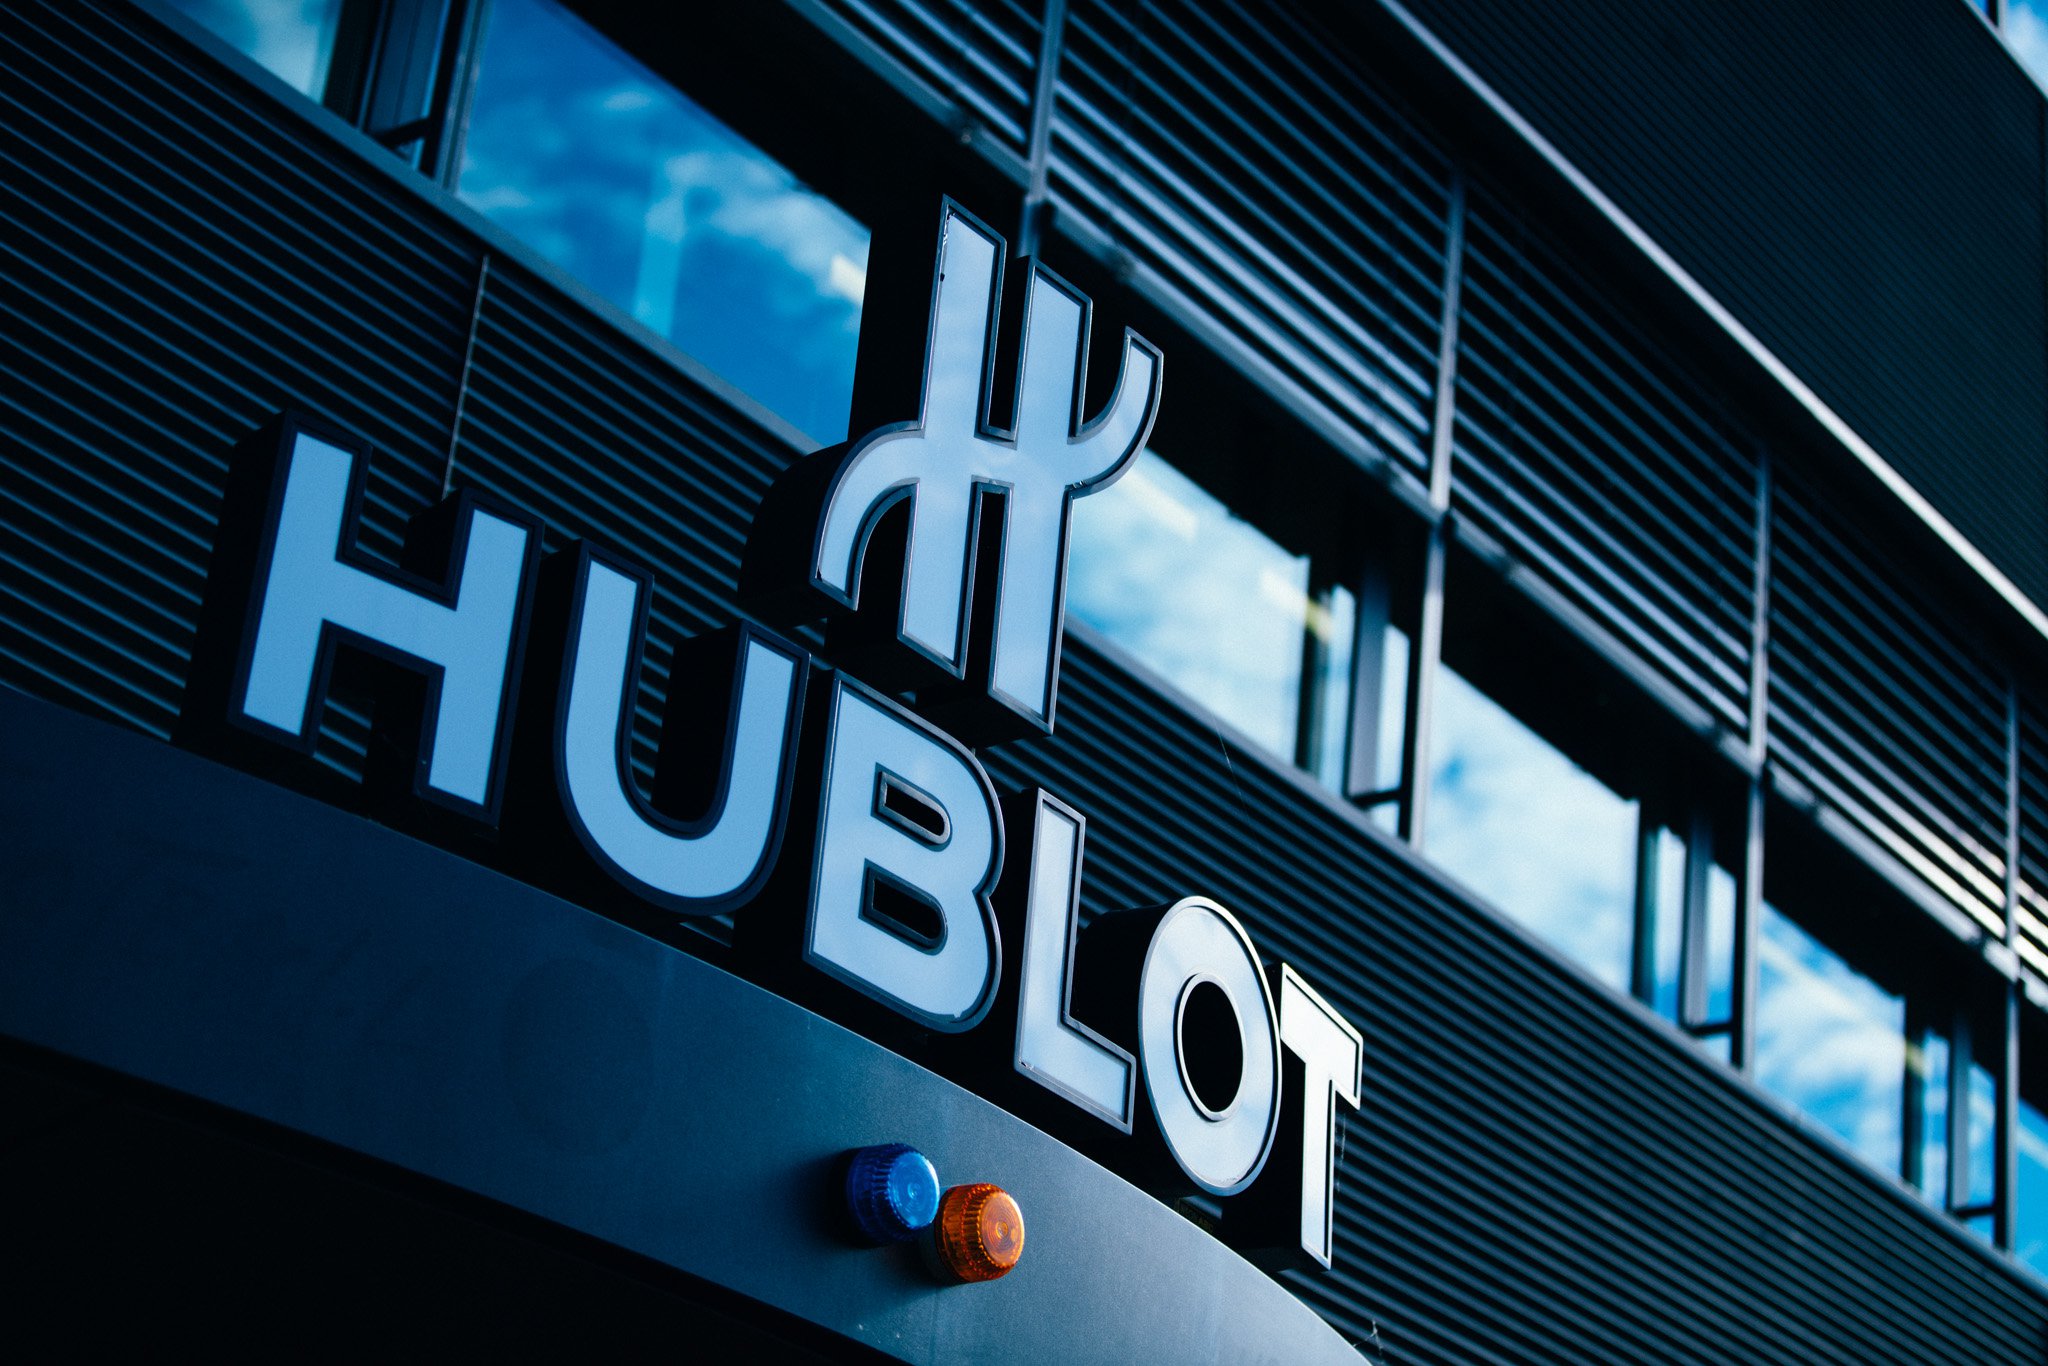 Hublot 2 Manufacture Nyon Switzerland Logo